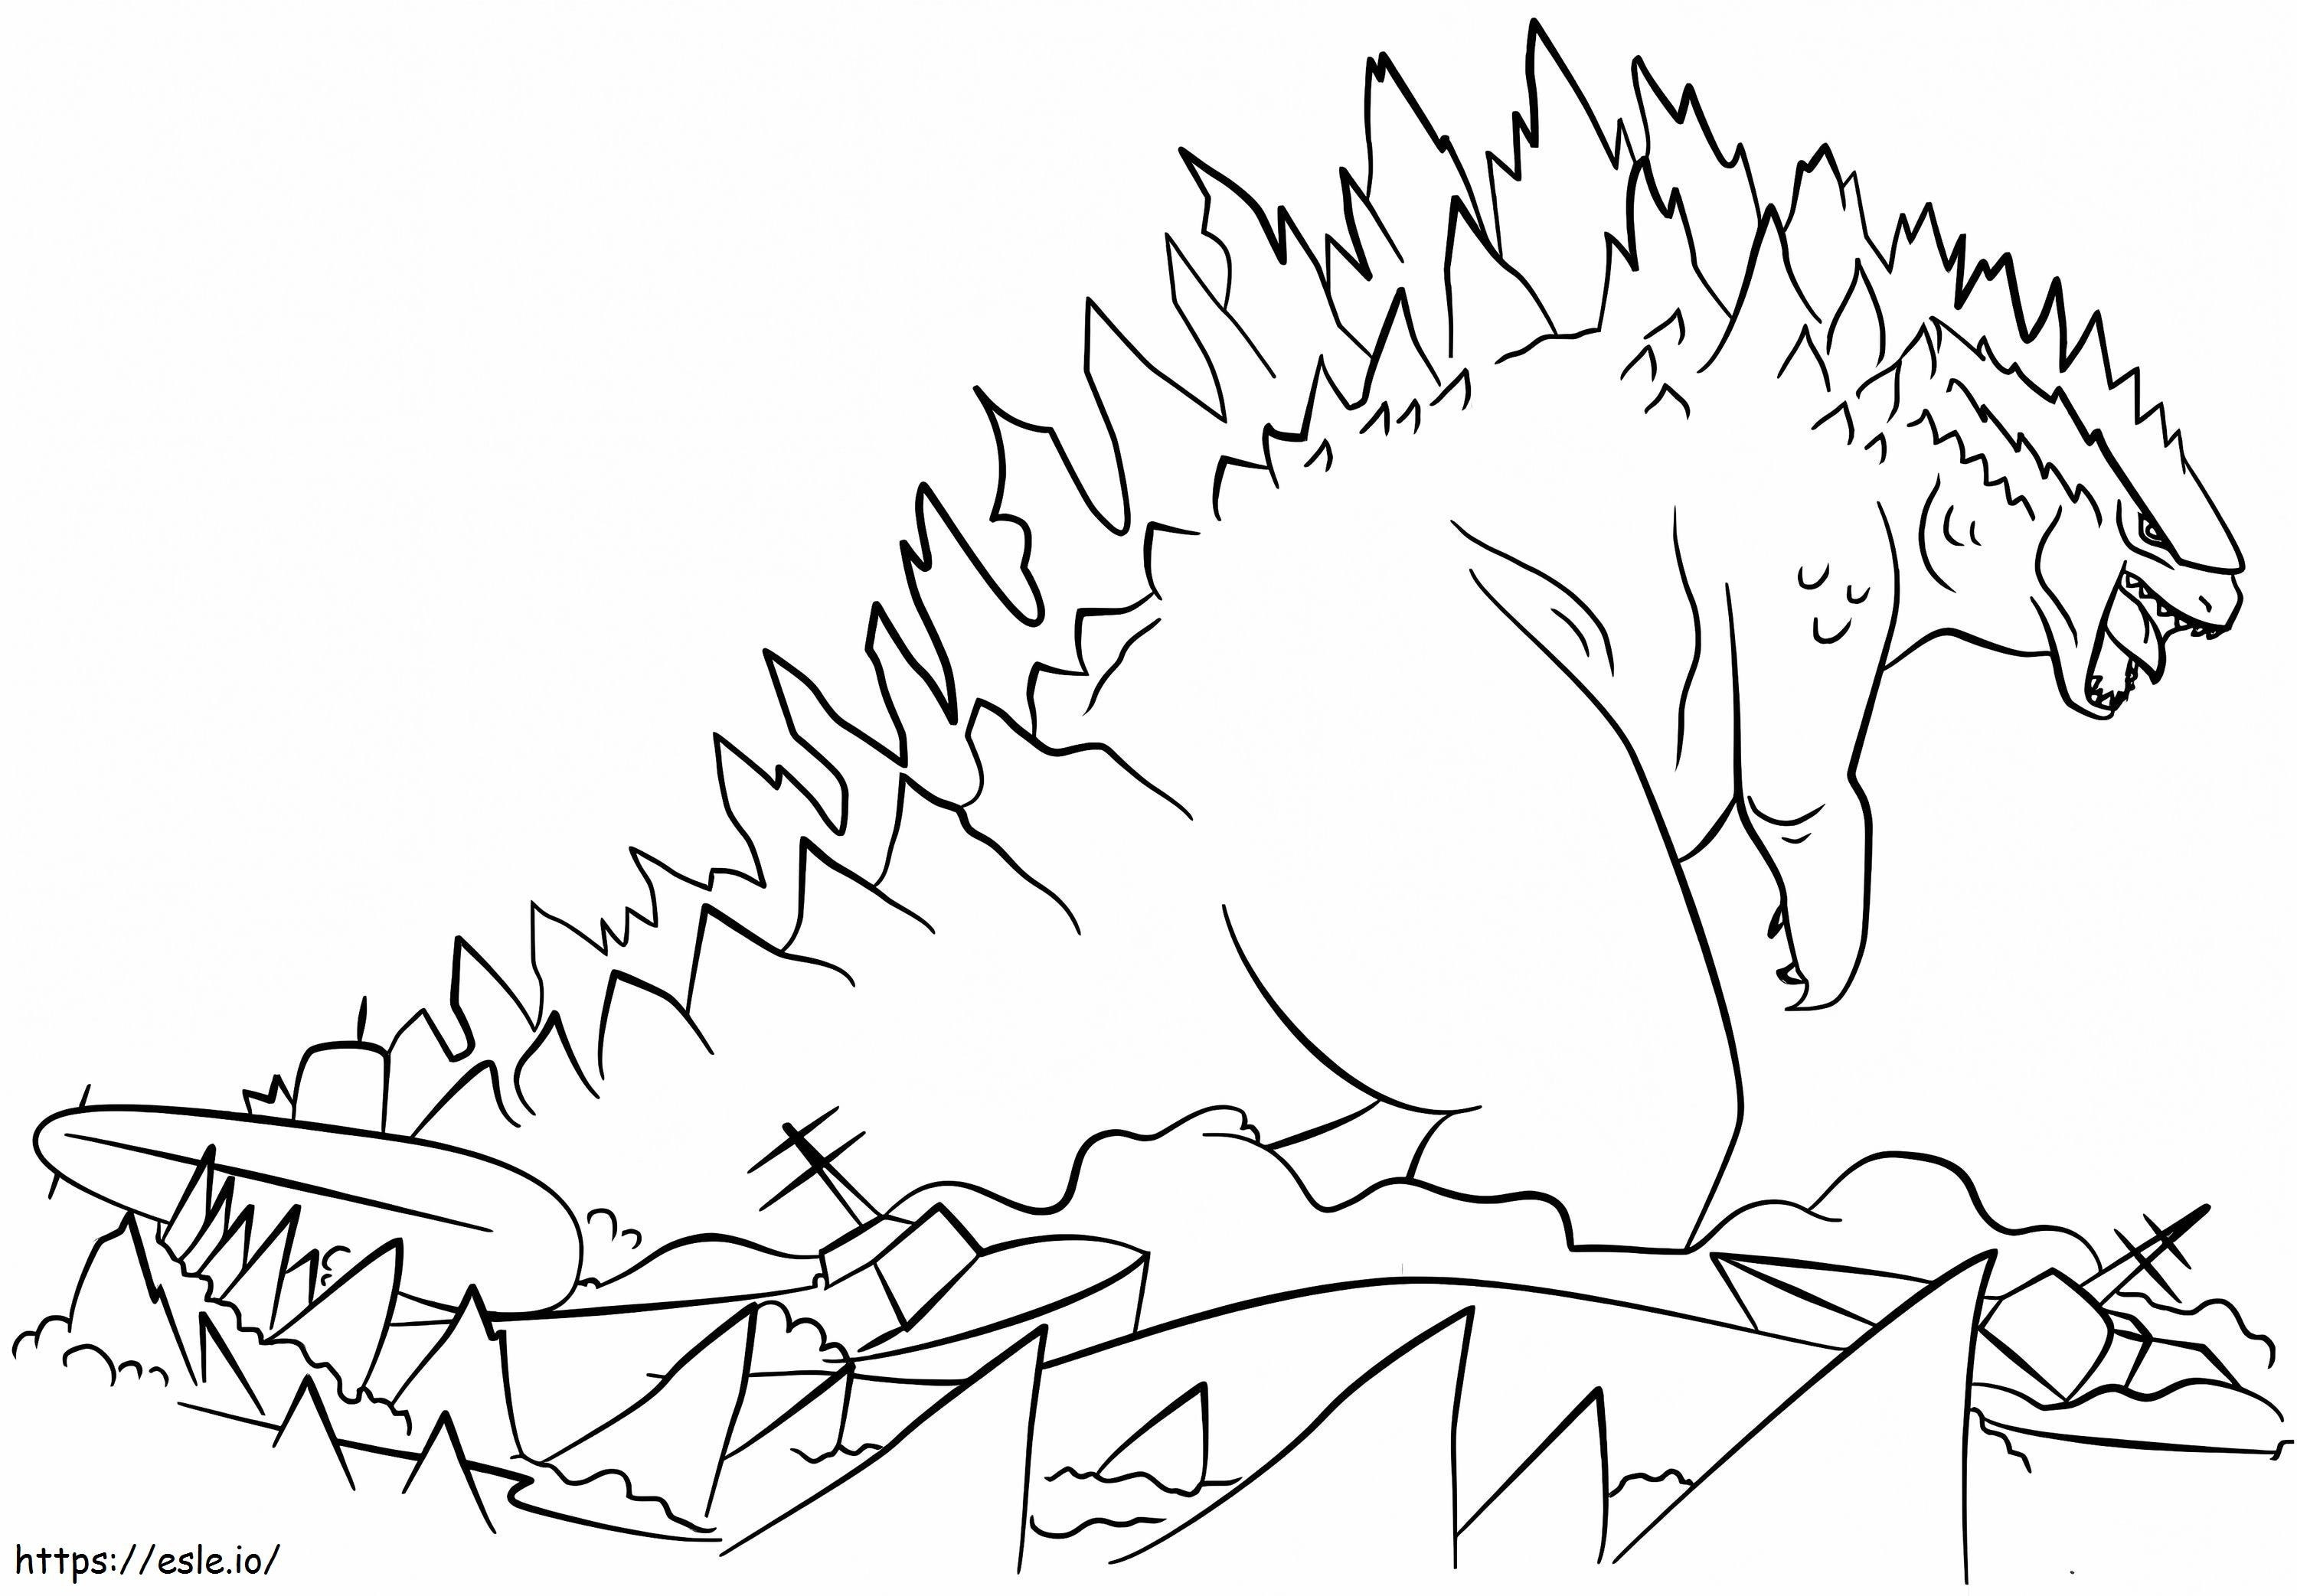 Coloriage Incroyable Godzilla à imprimer dessin